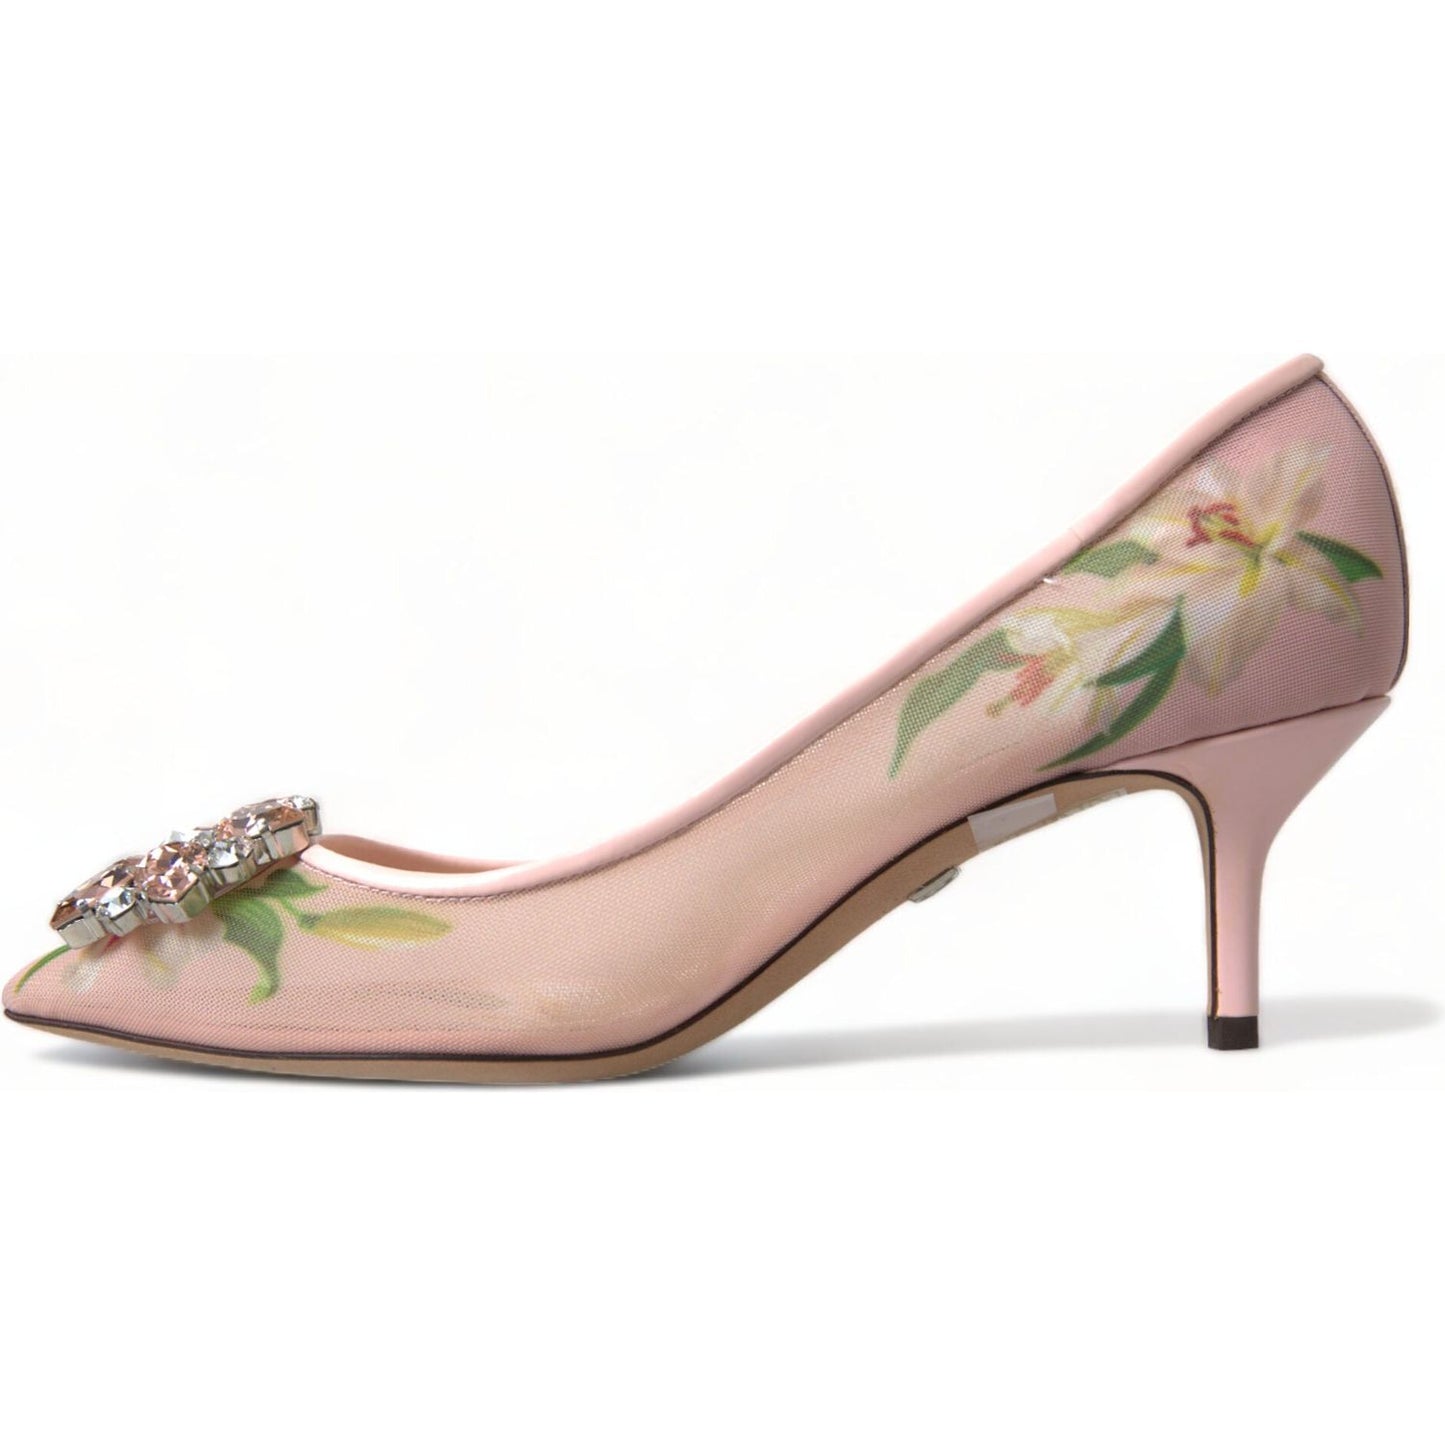 Dolce & Gabbana Elegant Pink Floral Crystal Pumps pink-floral-crystal-heels-pumps-shoes 465A9563-bg-scaled-2b224273-dbf.jpg